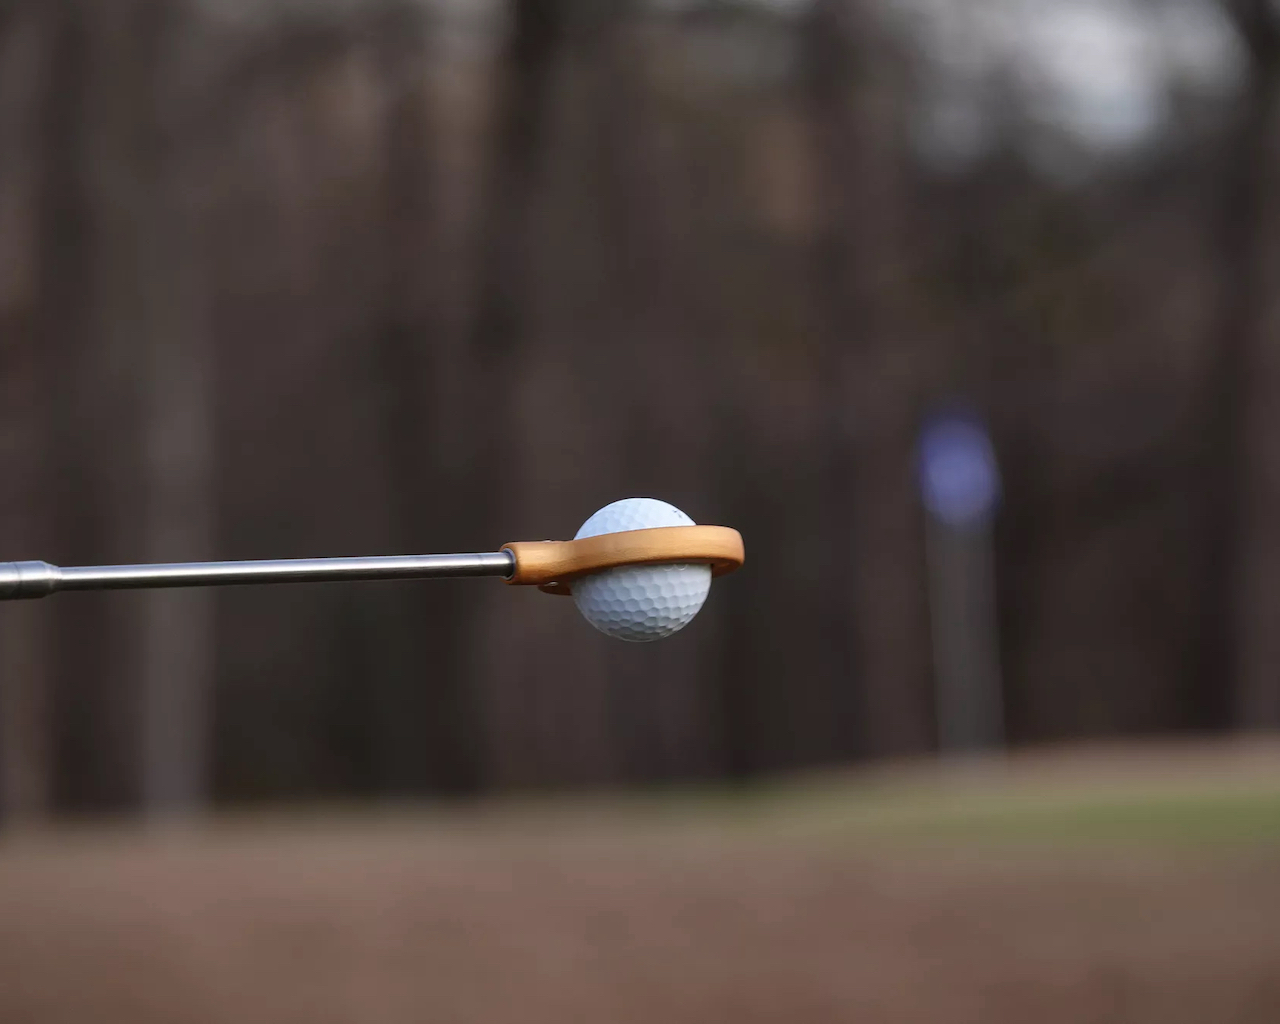 Golf ball retriever in use